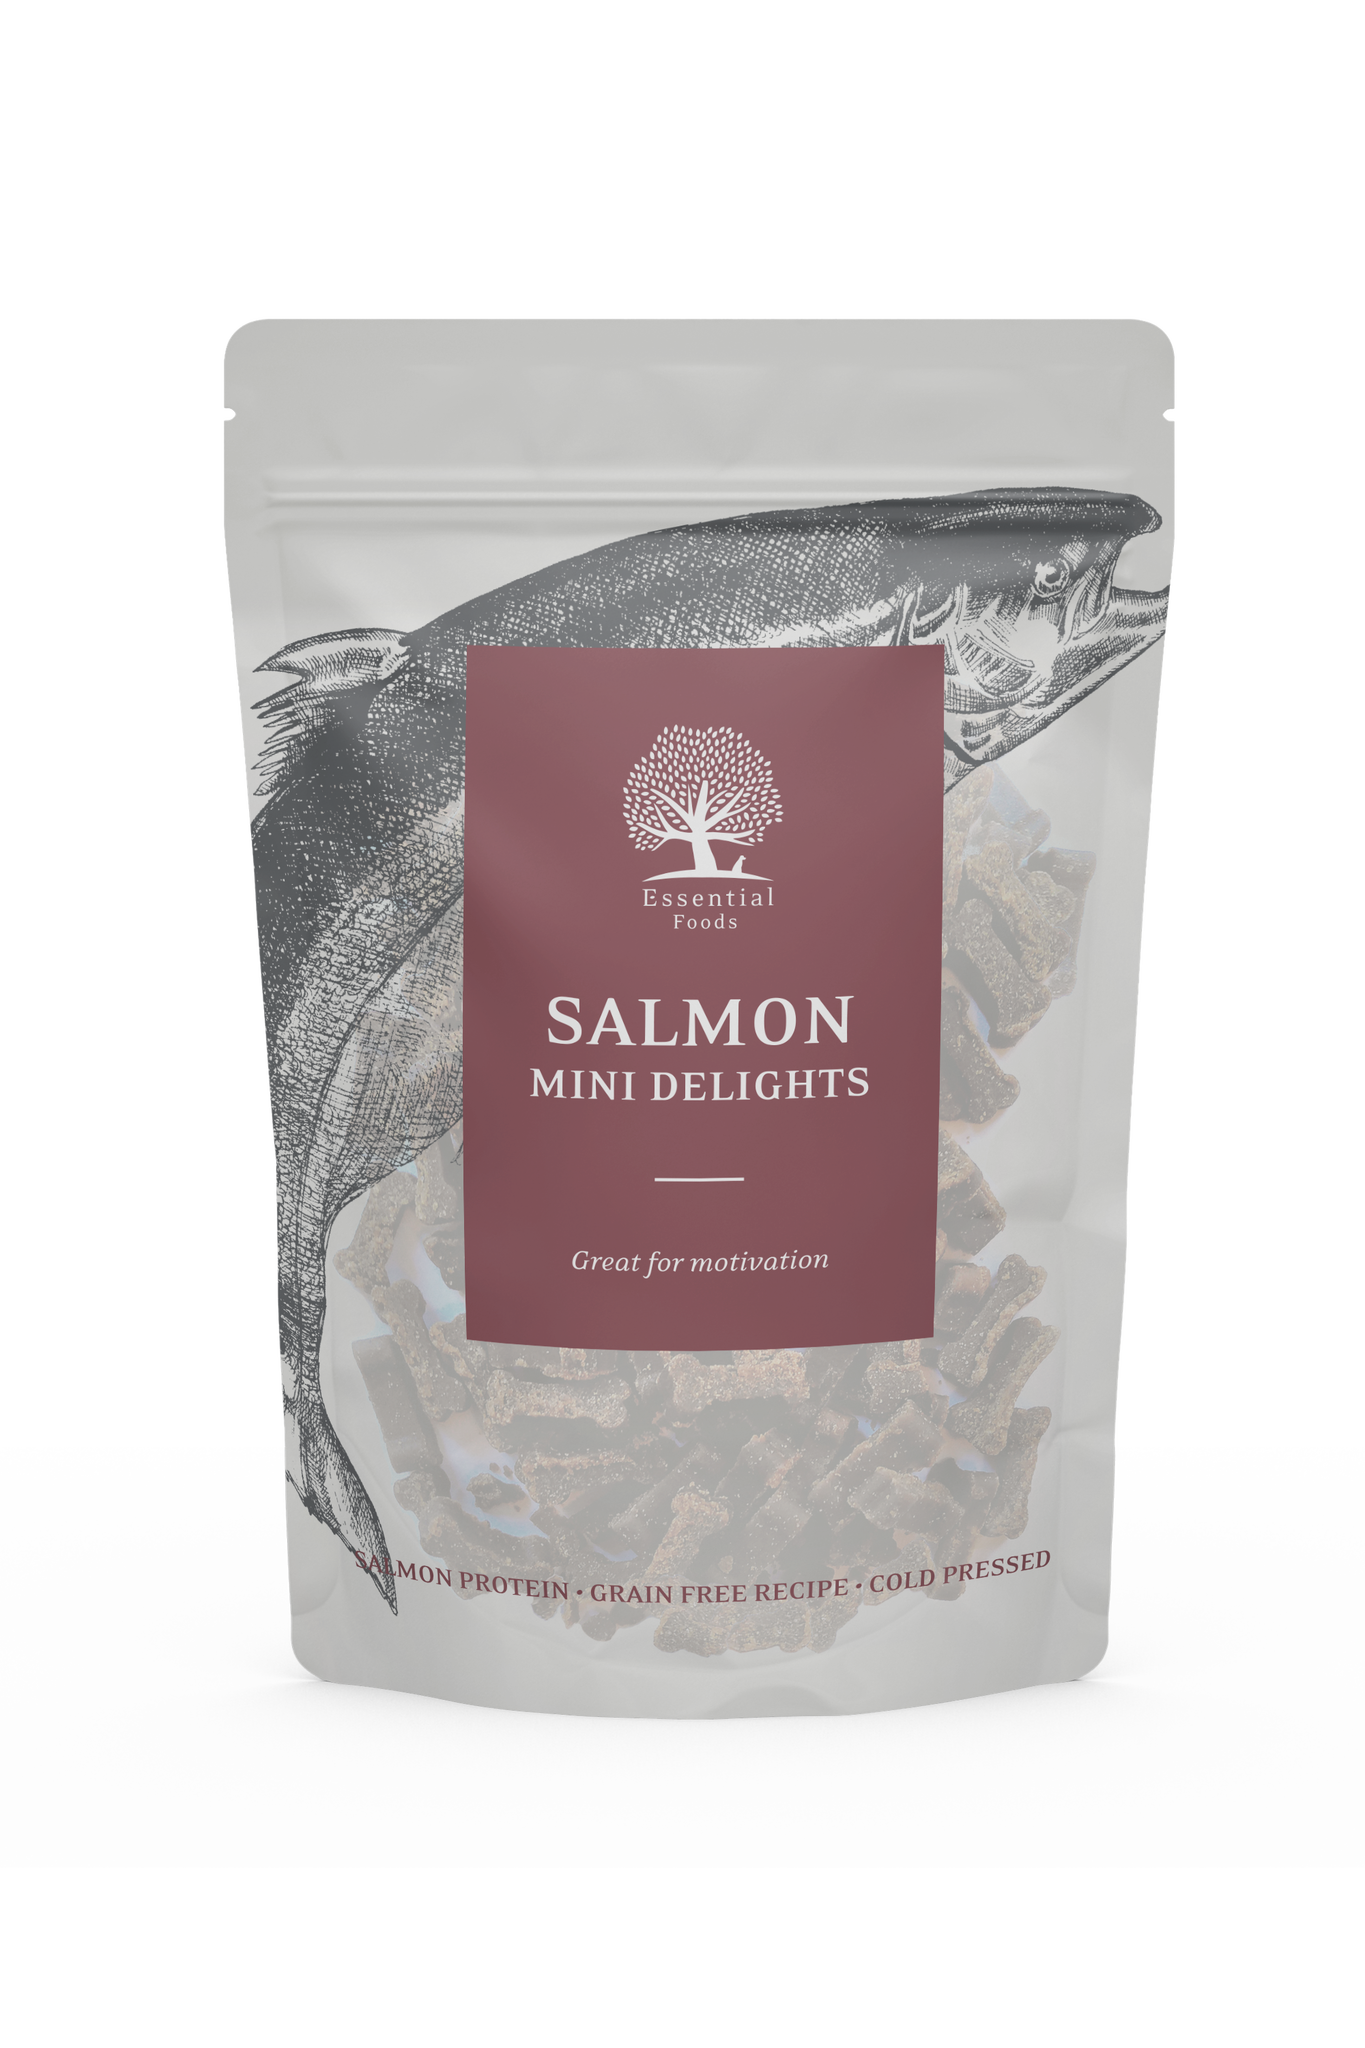 Essential Salmon Mini Delights, belöningsgodis 100 g.